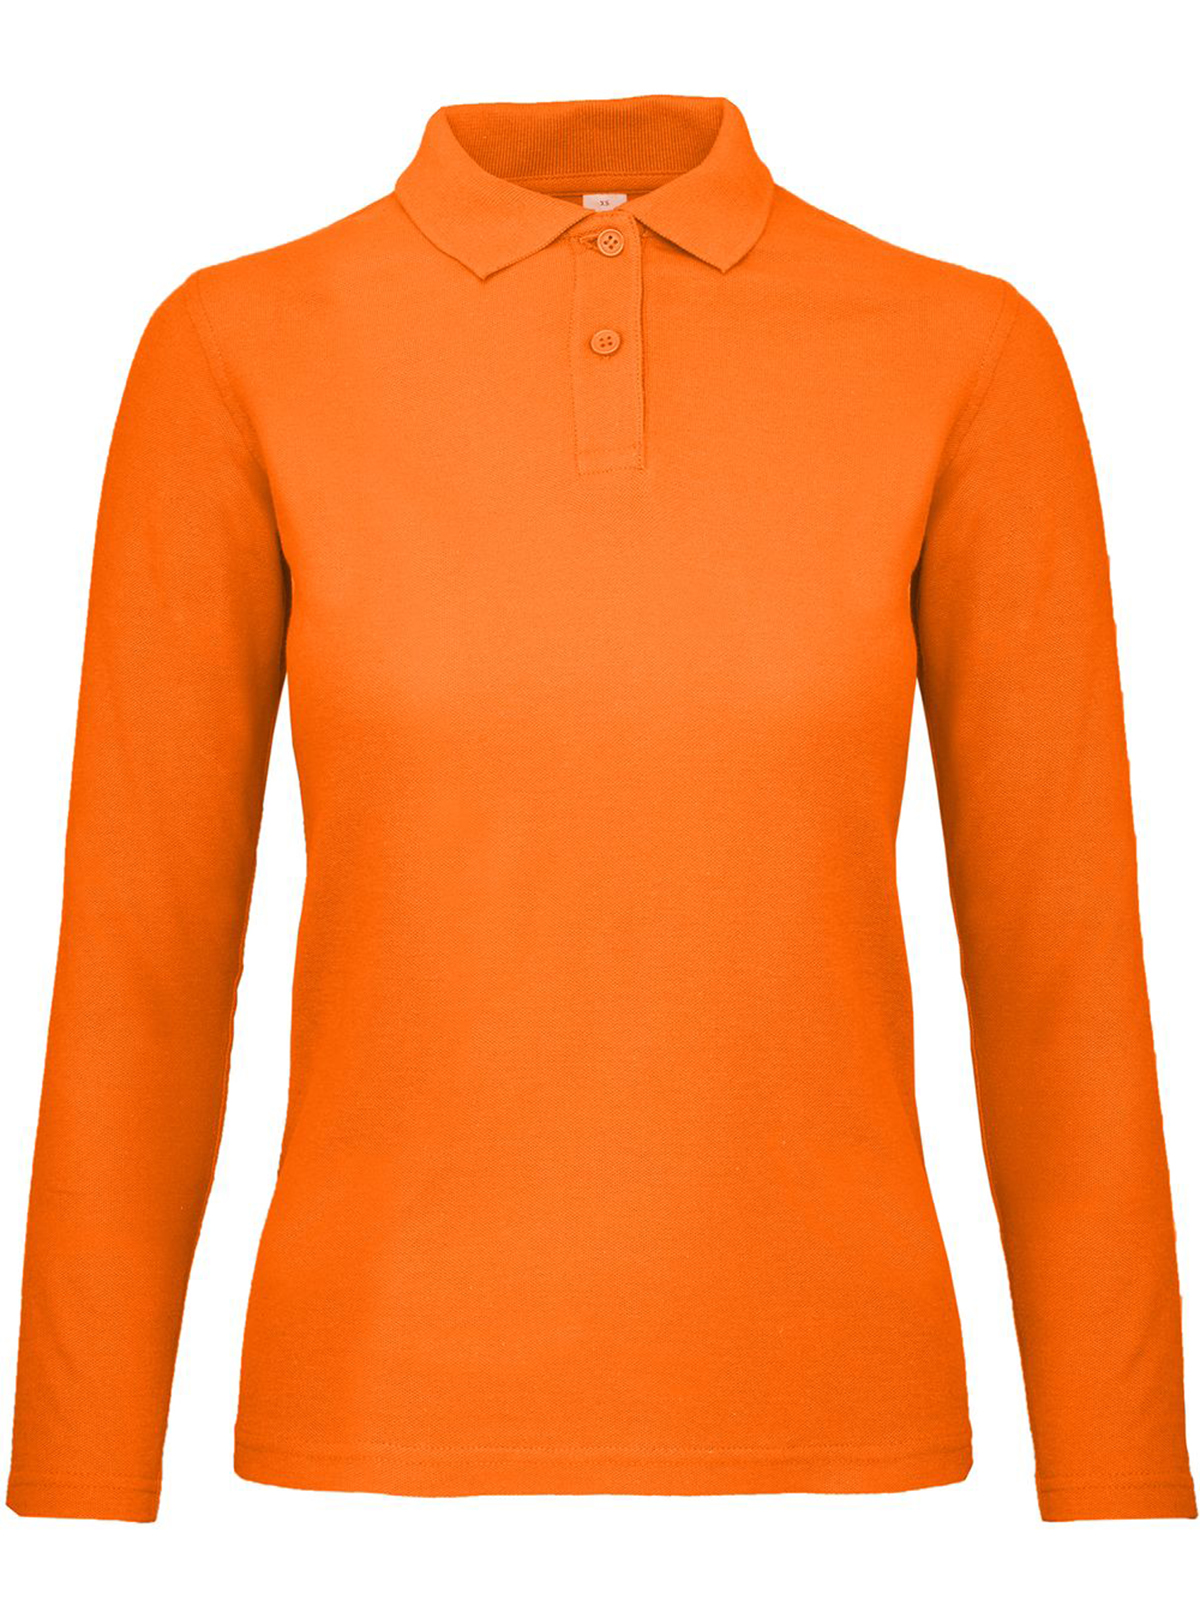 id001-lsl-women-orange.webp